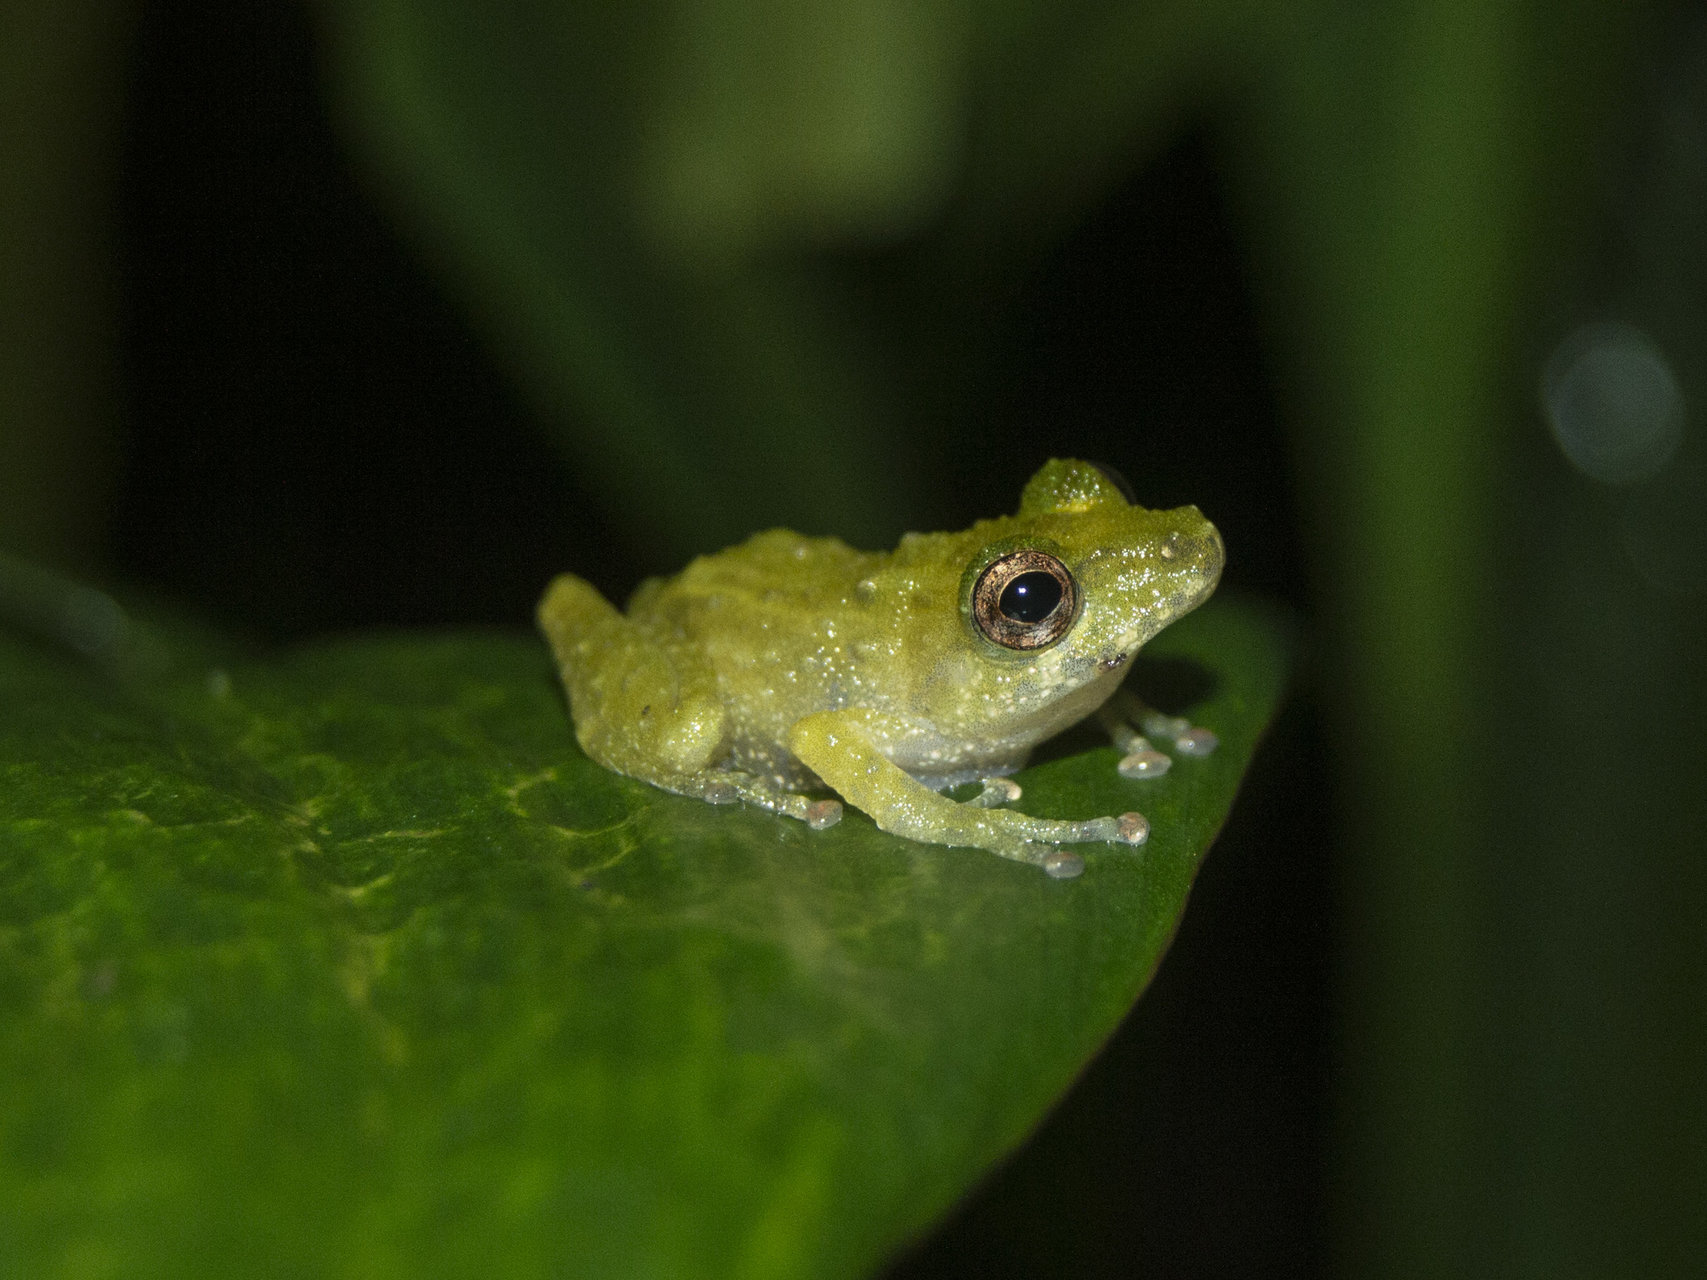 A froggie от Stanimira Deleva - viperaaspis